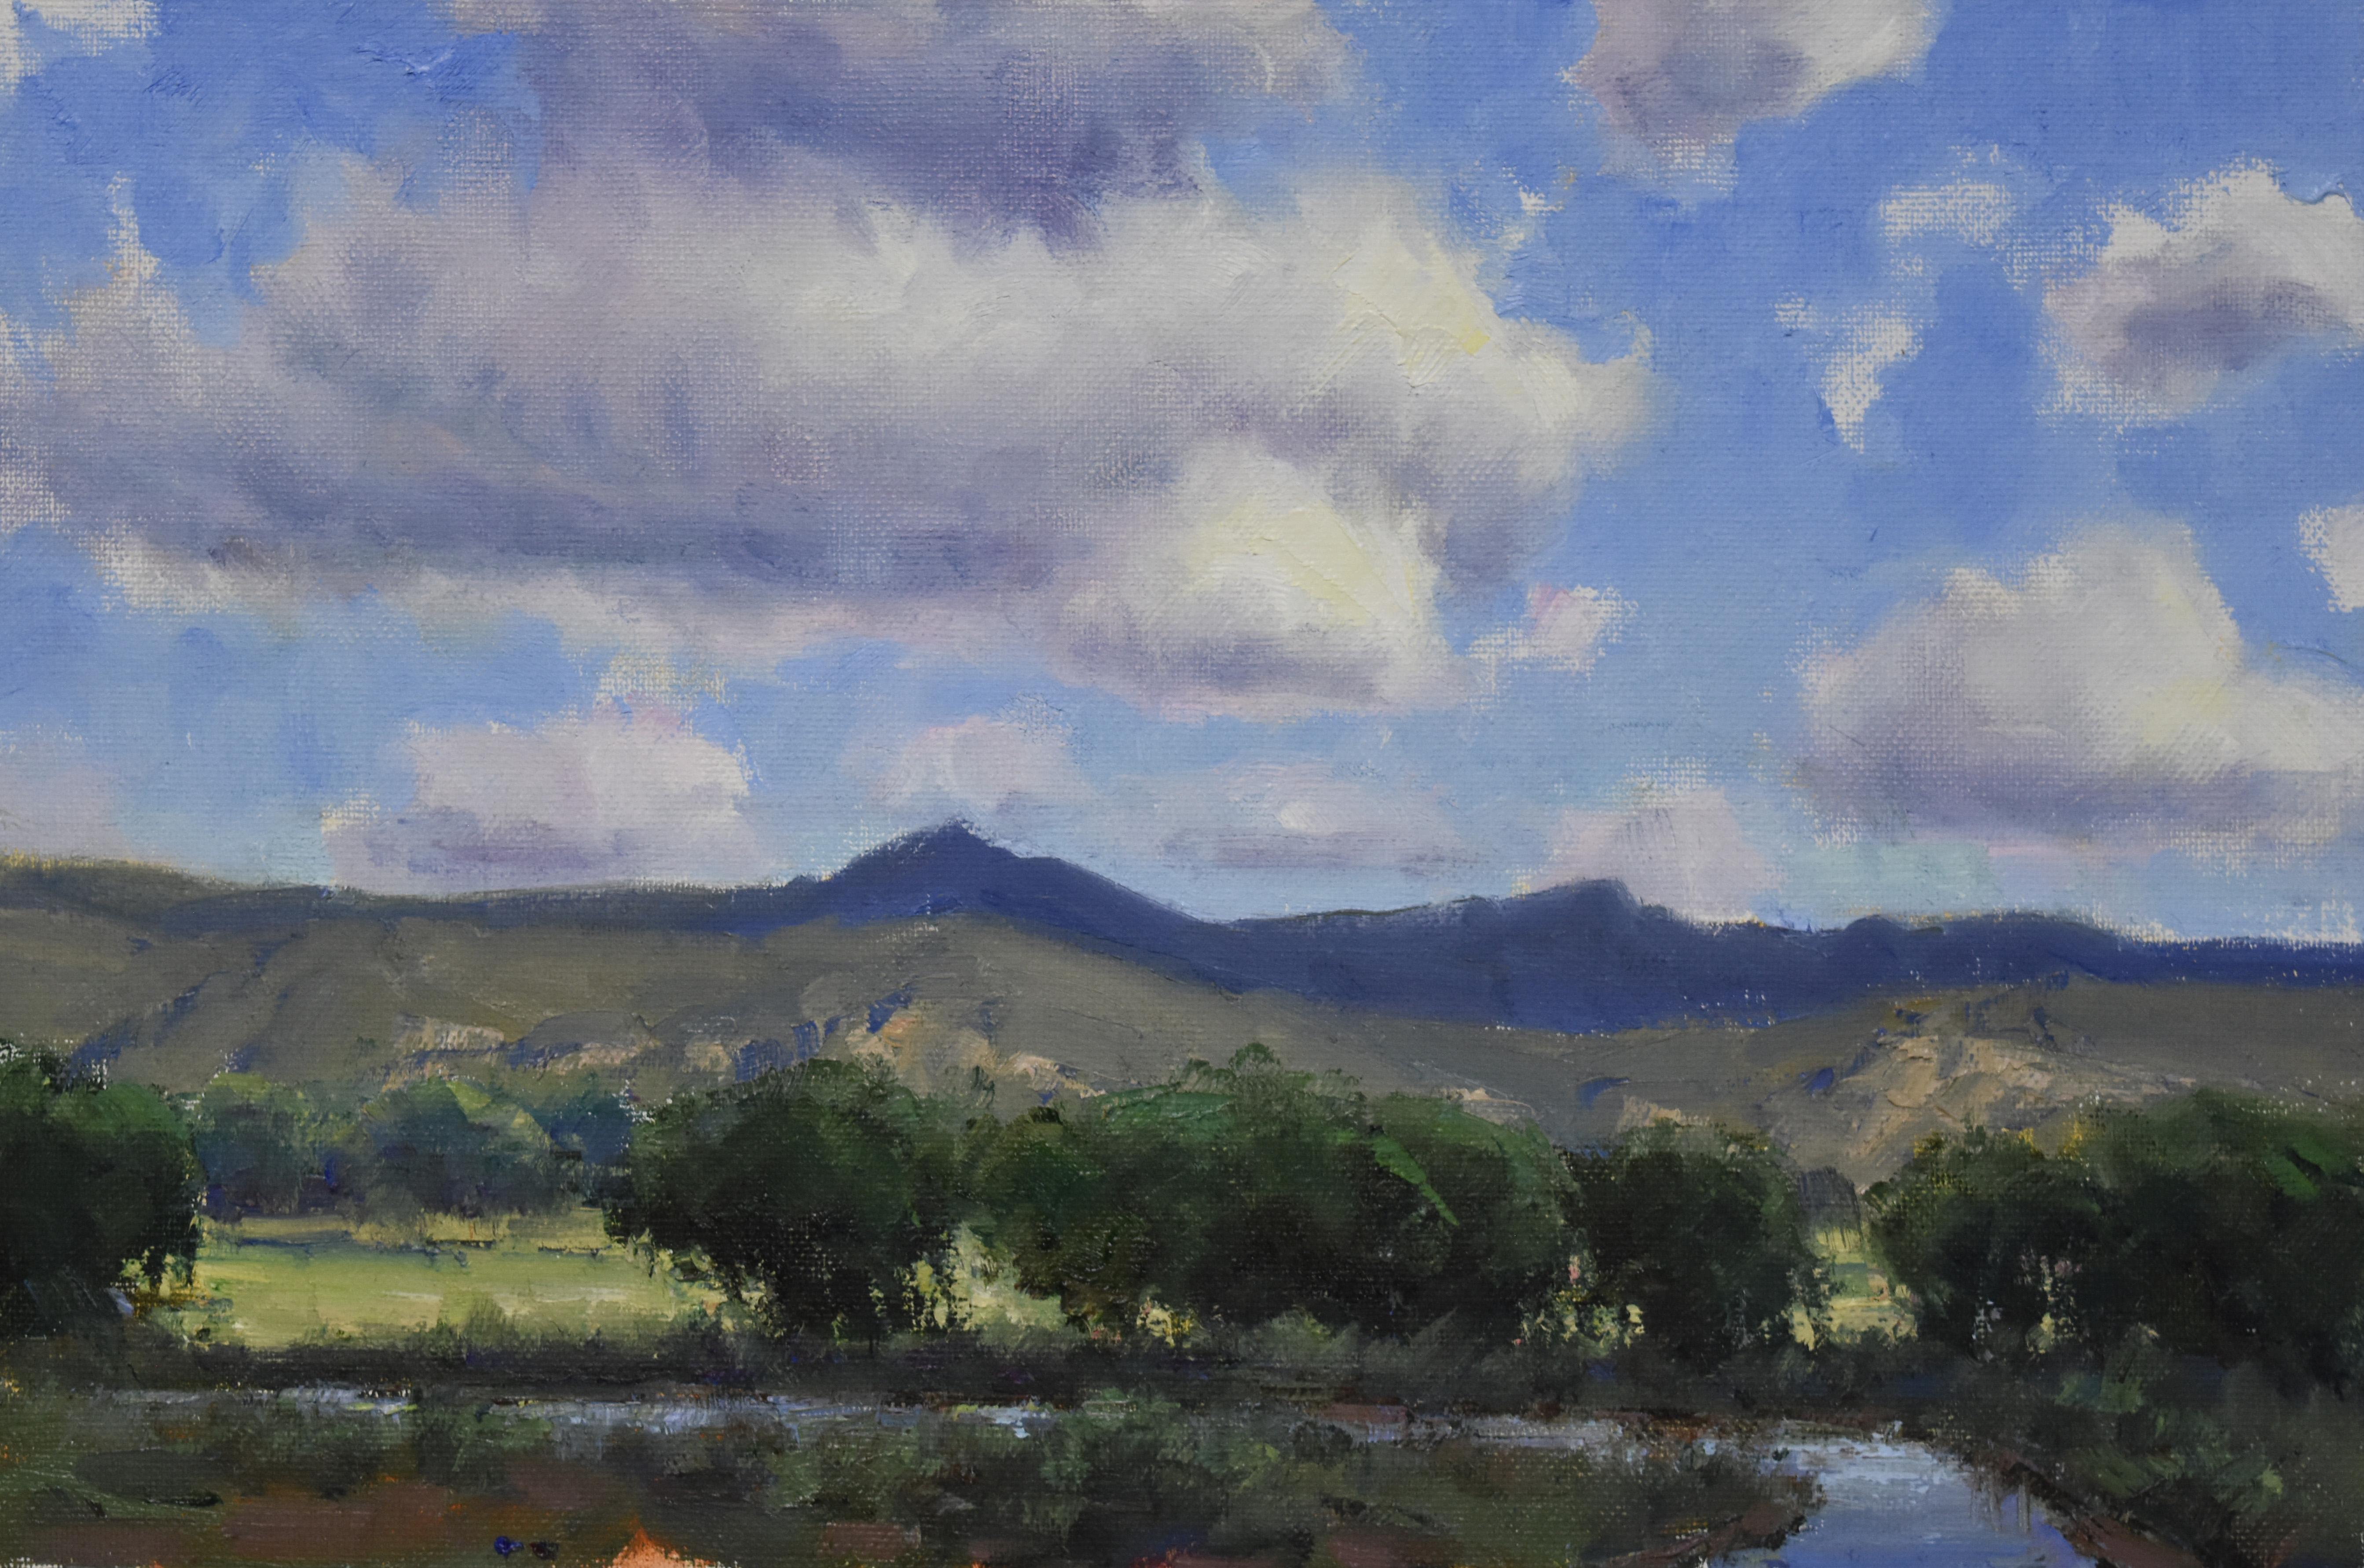 Dan Young Landscape Painting - Summer Skies (big sky, cumulus puffy clouds, landscape)